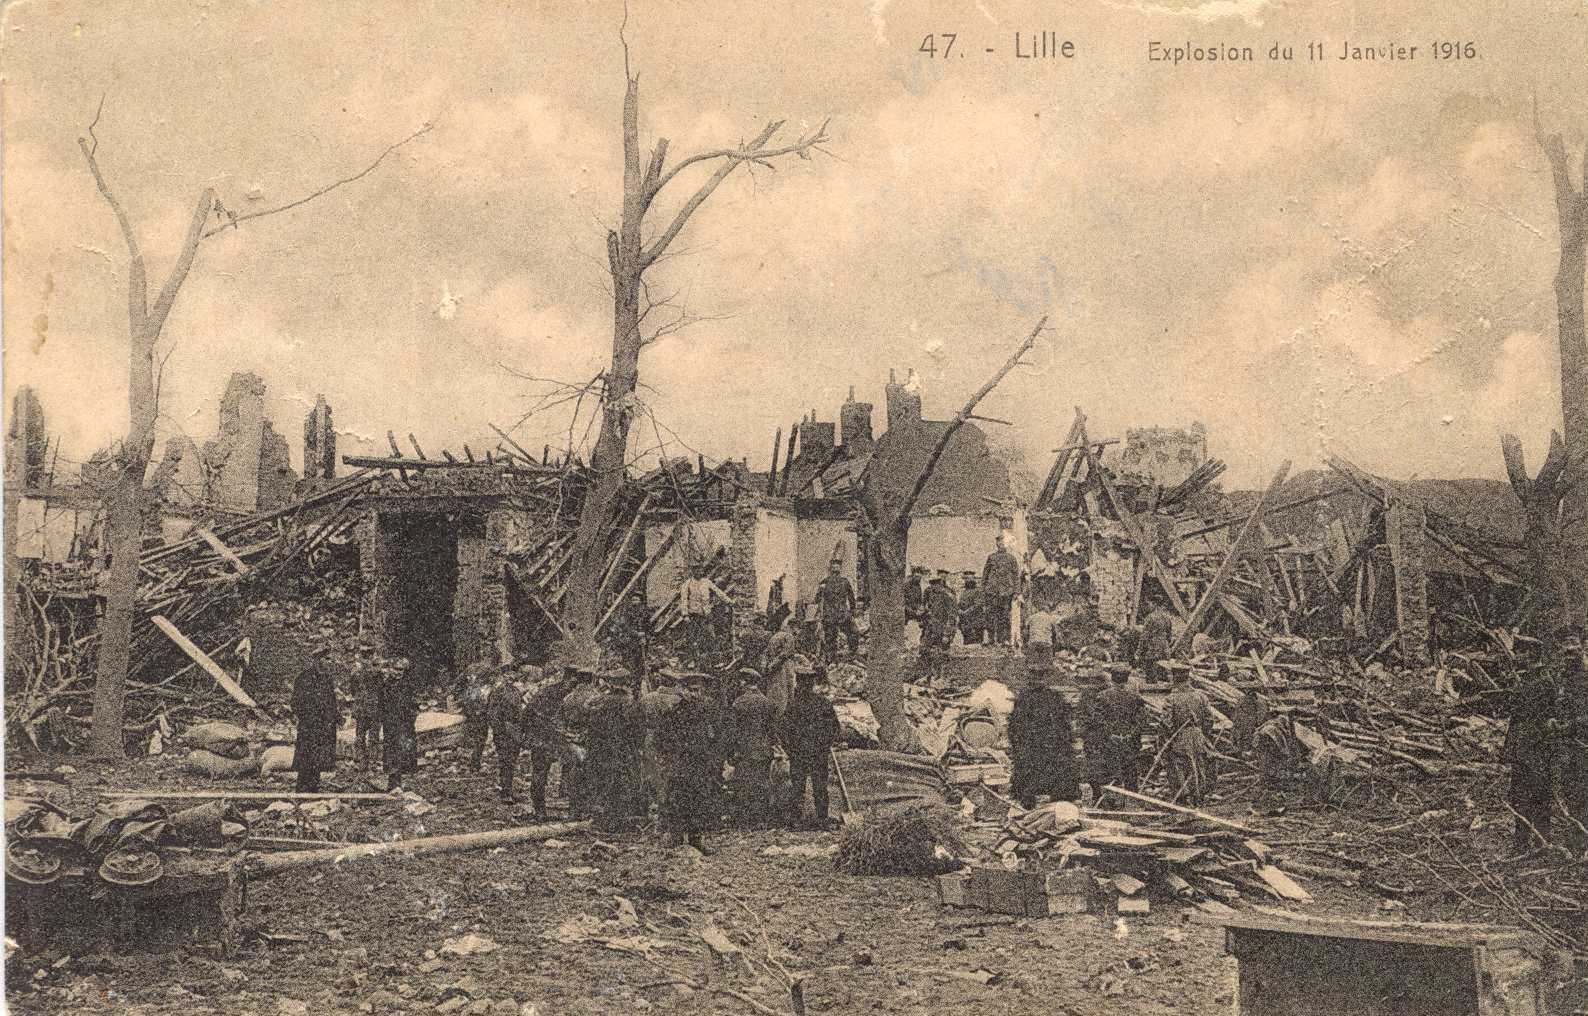 [Lille+explosion+11+janvier+1916.jpg]